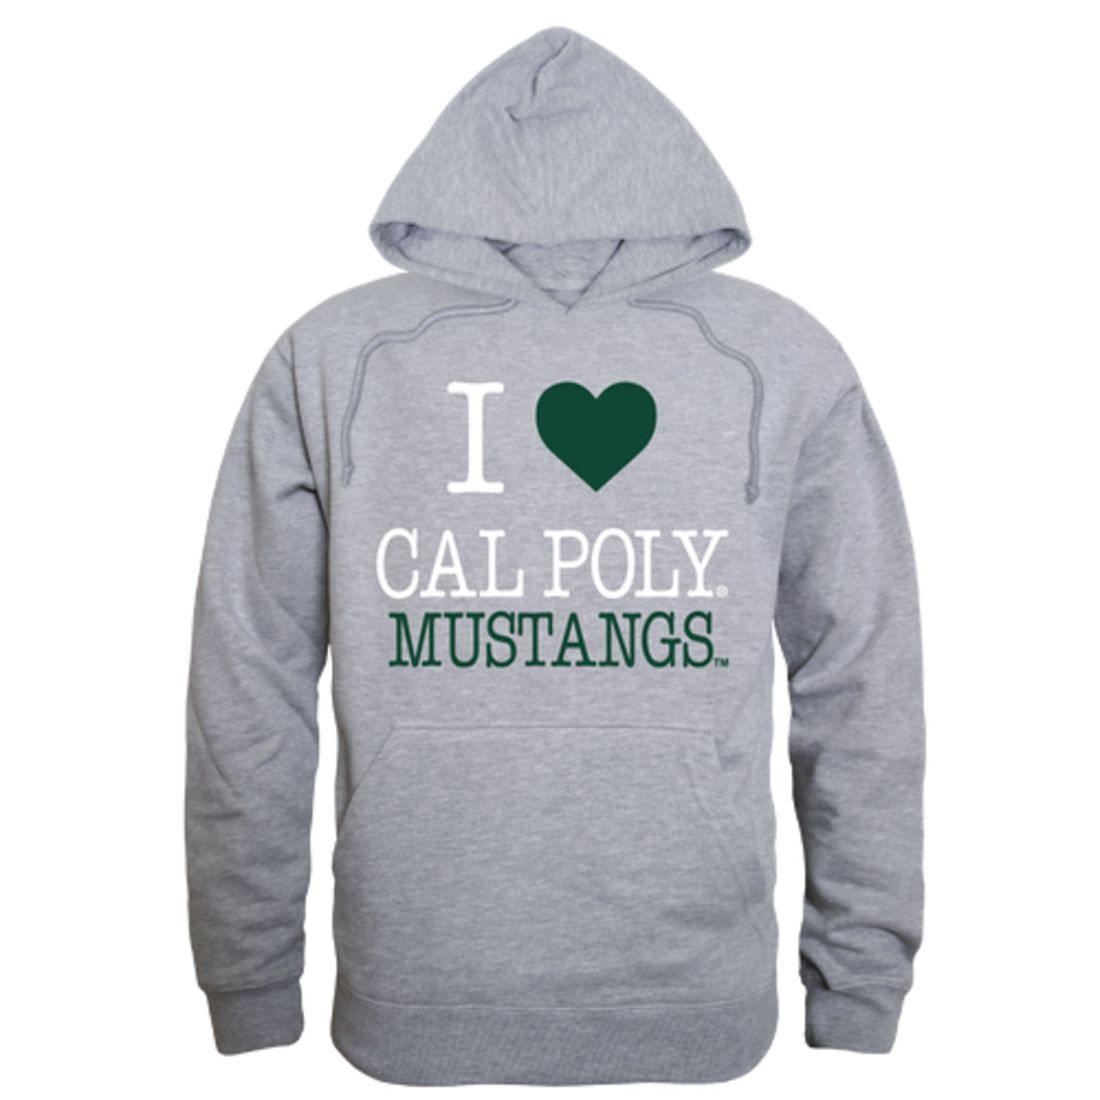 I Love Cal Poly California Polytechnic State University Mustangs Hoodie Sweatshirt-Campus-Wardrobe